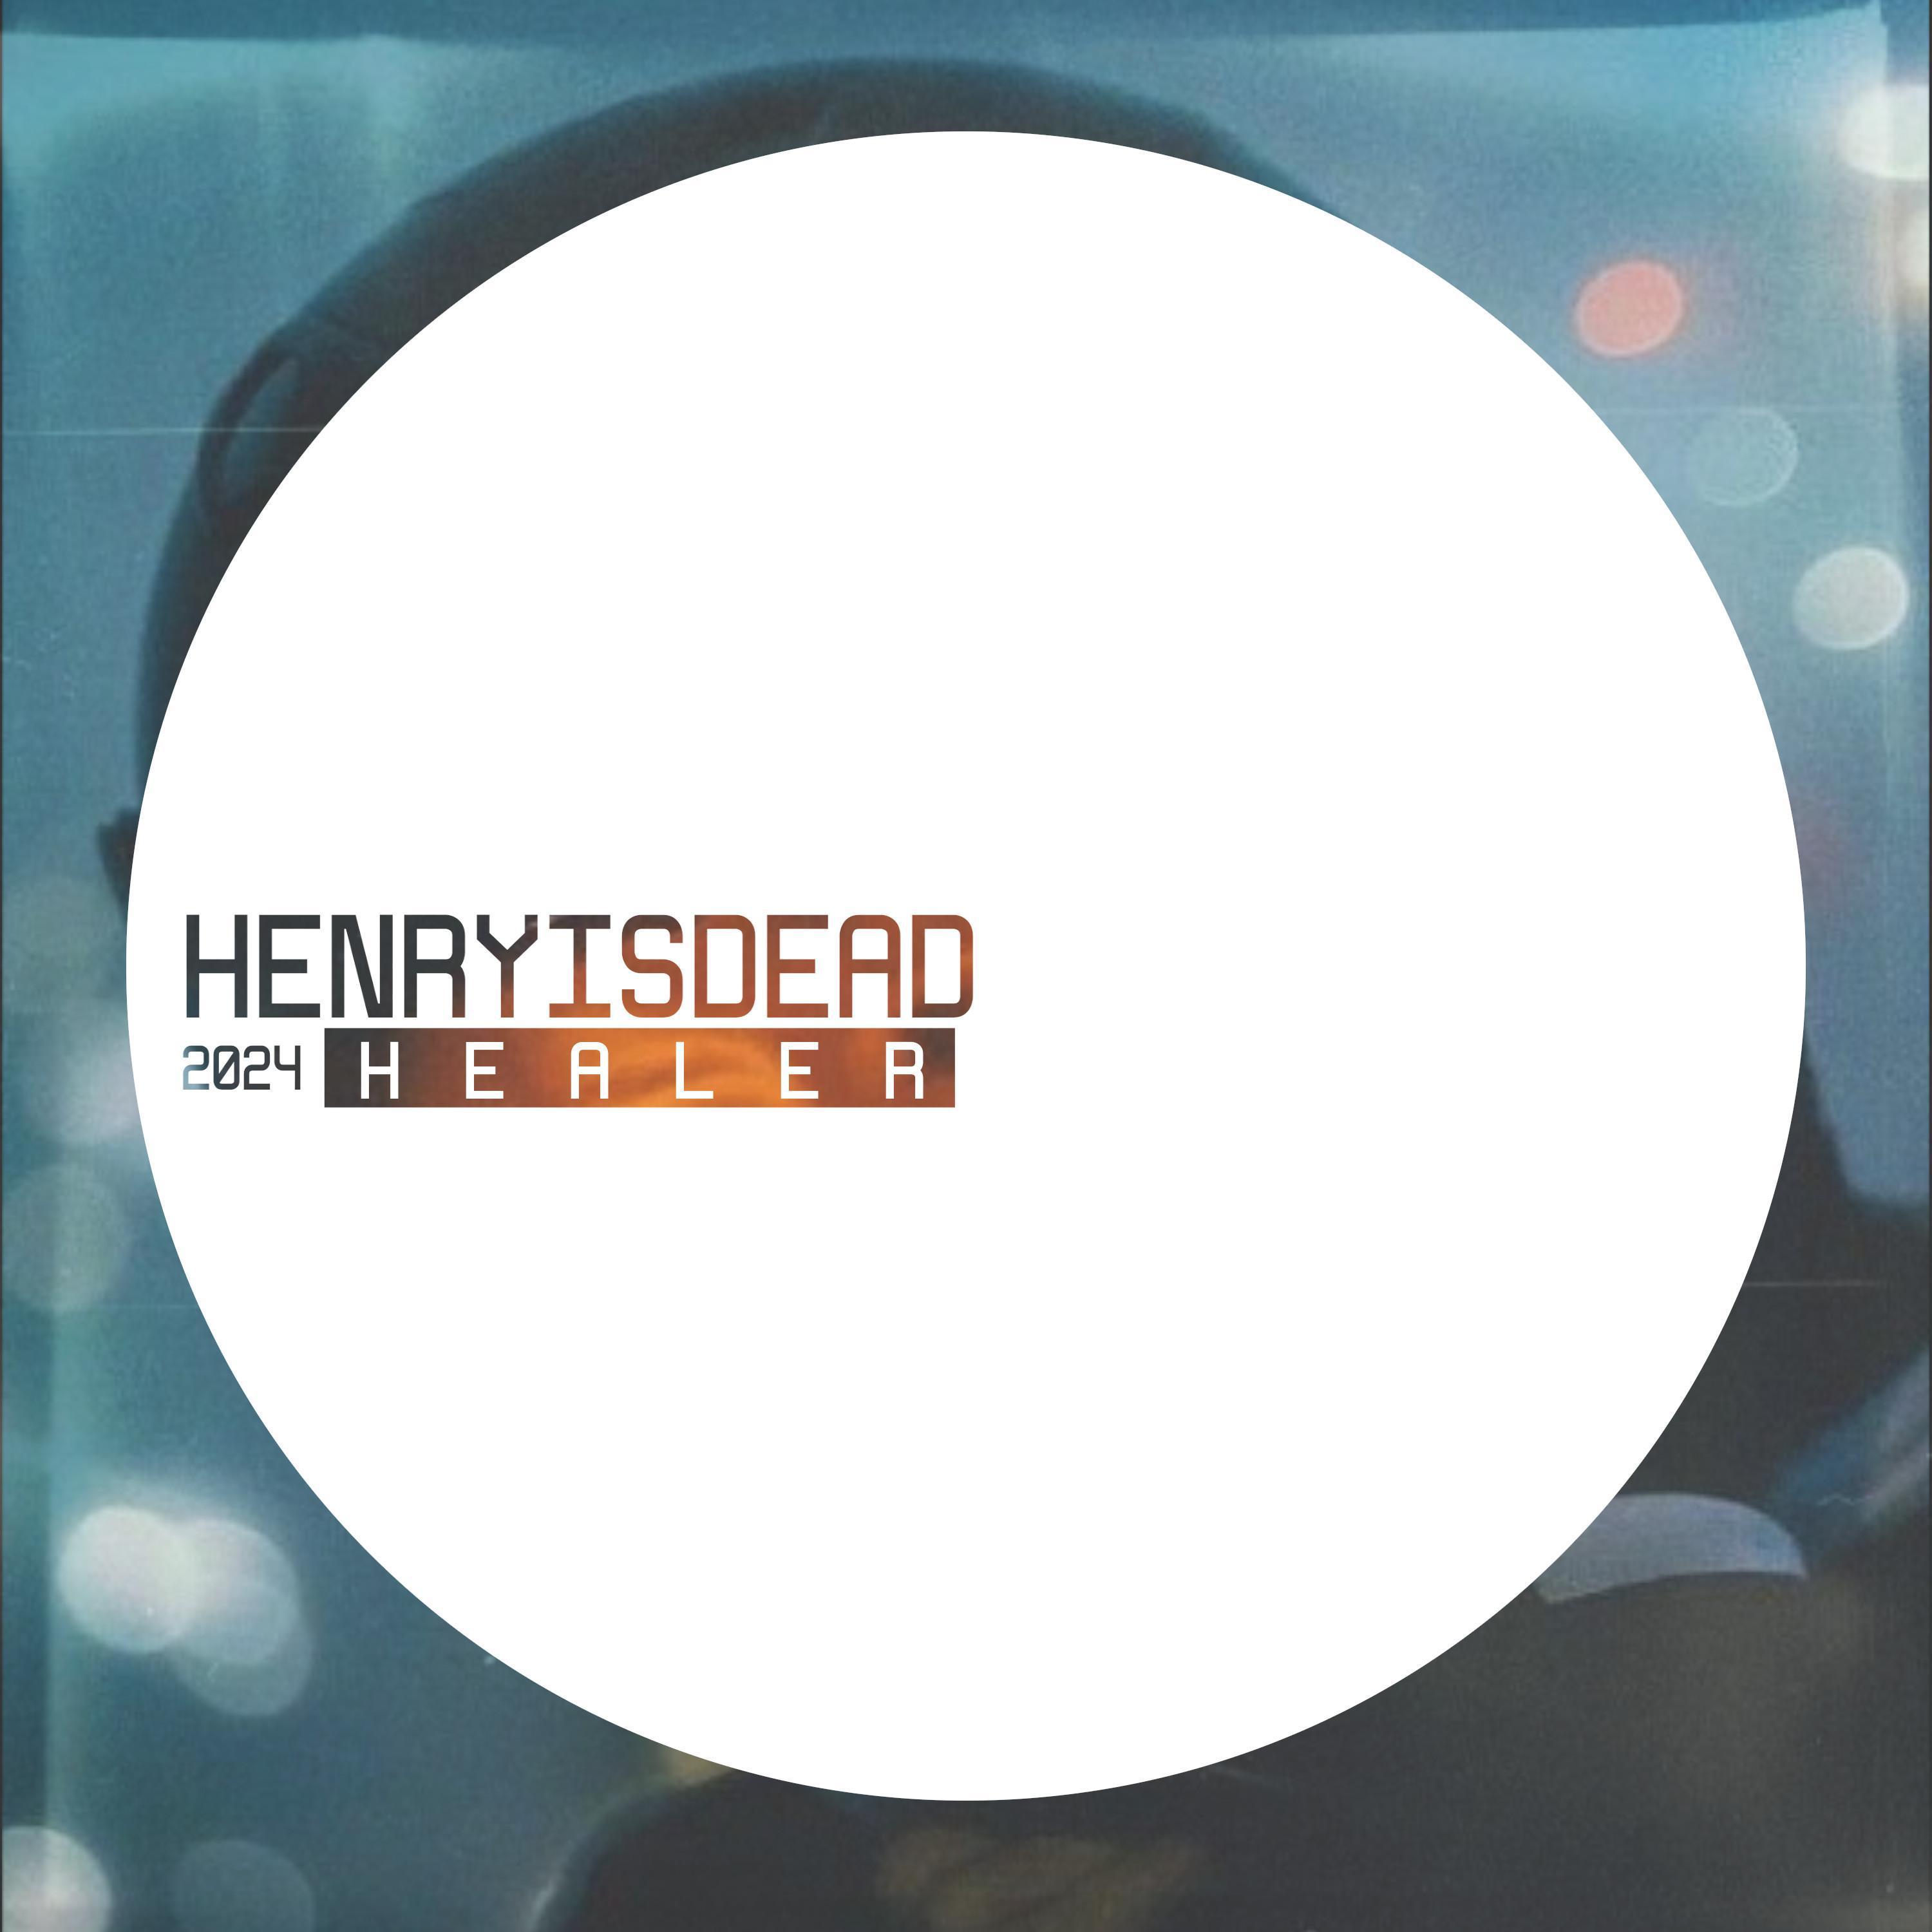 henryisdead - healer